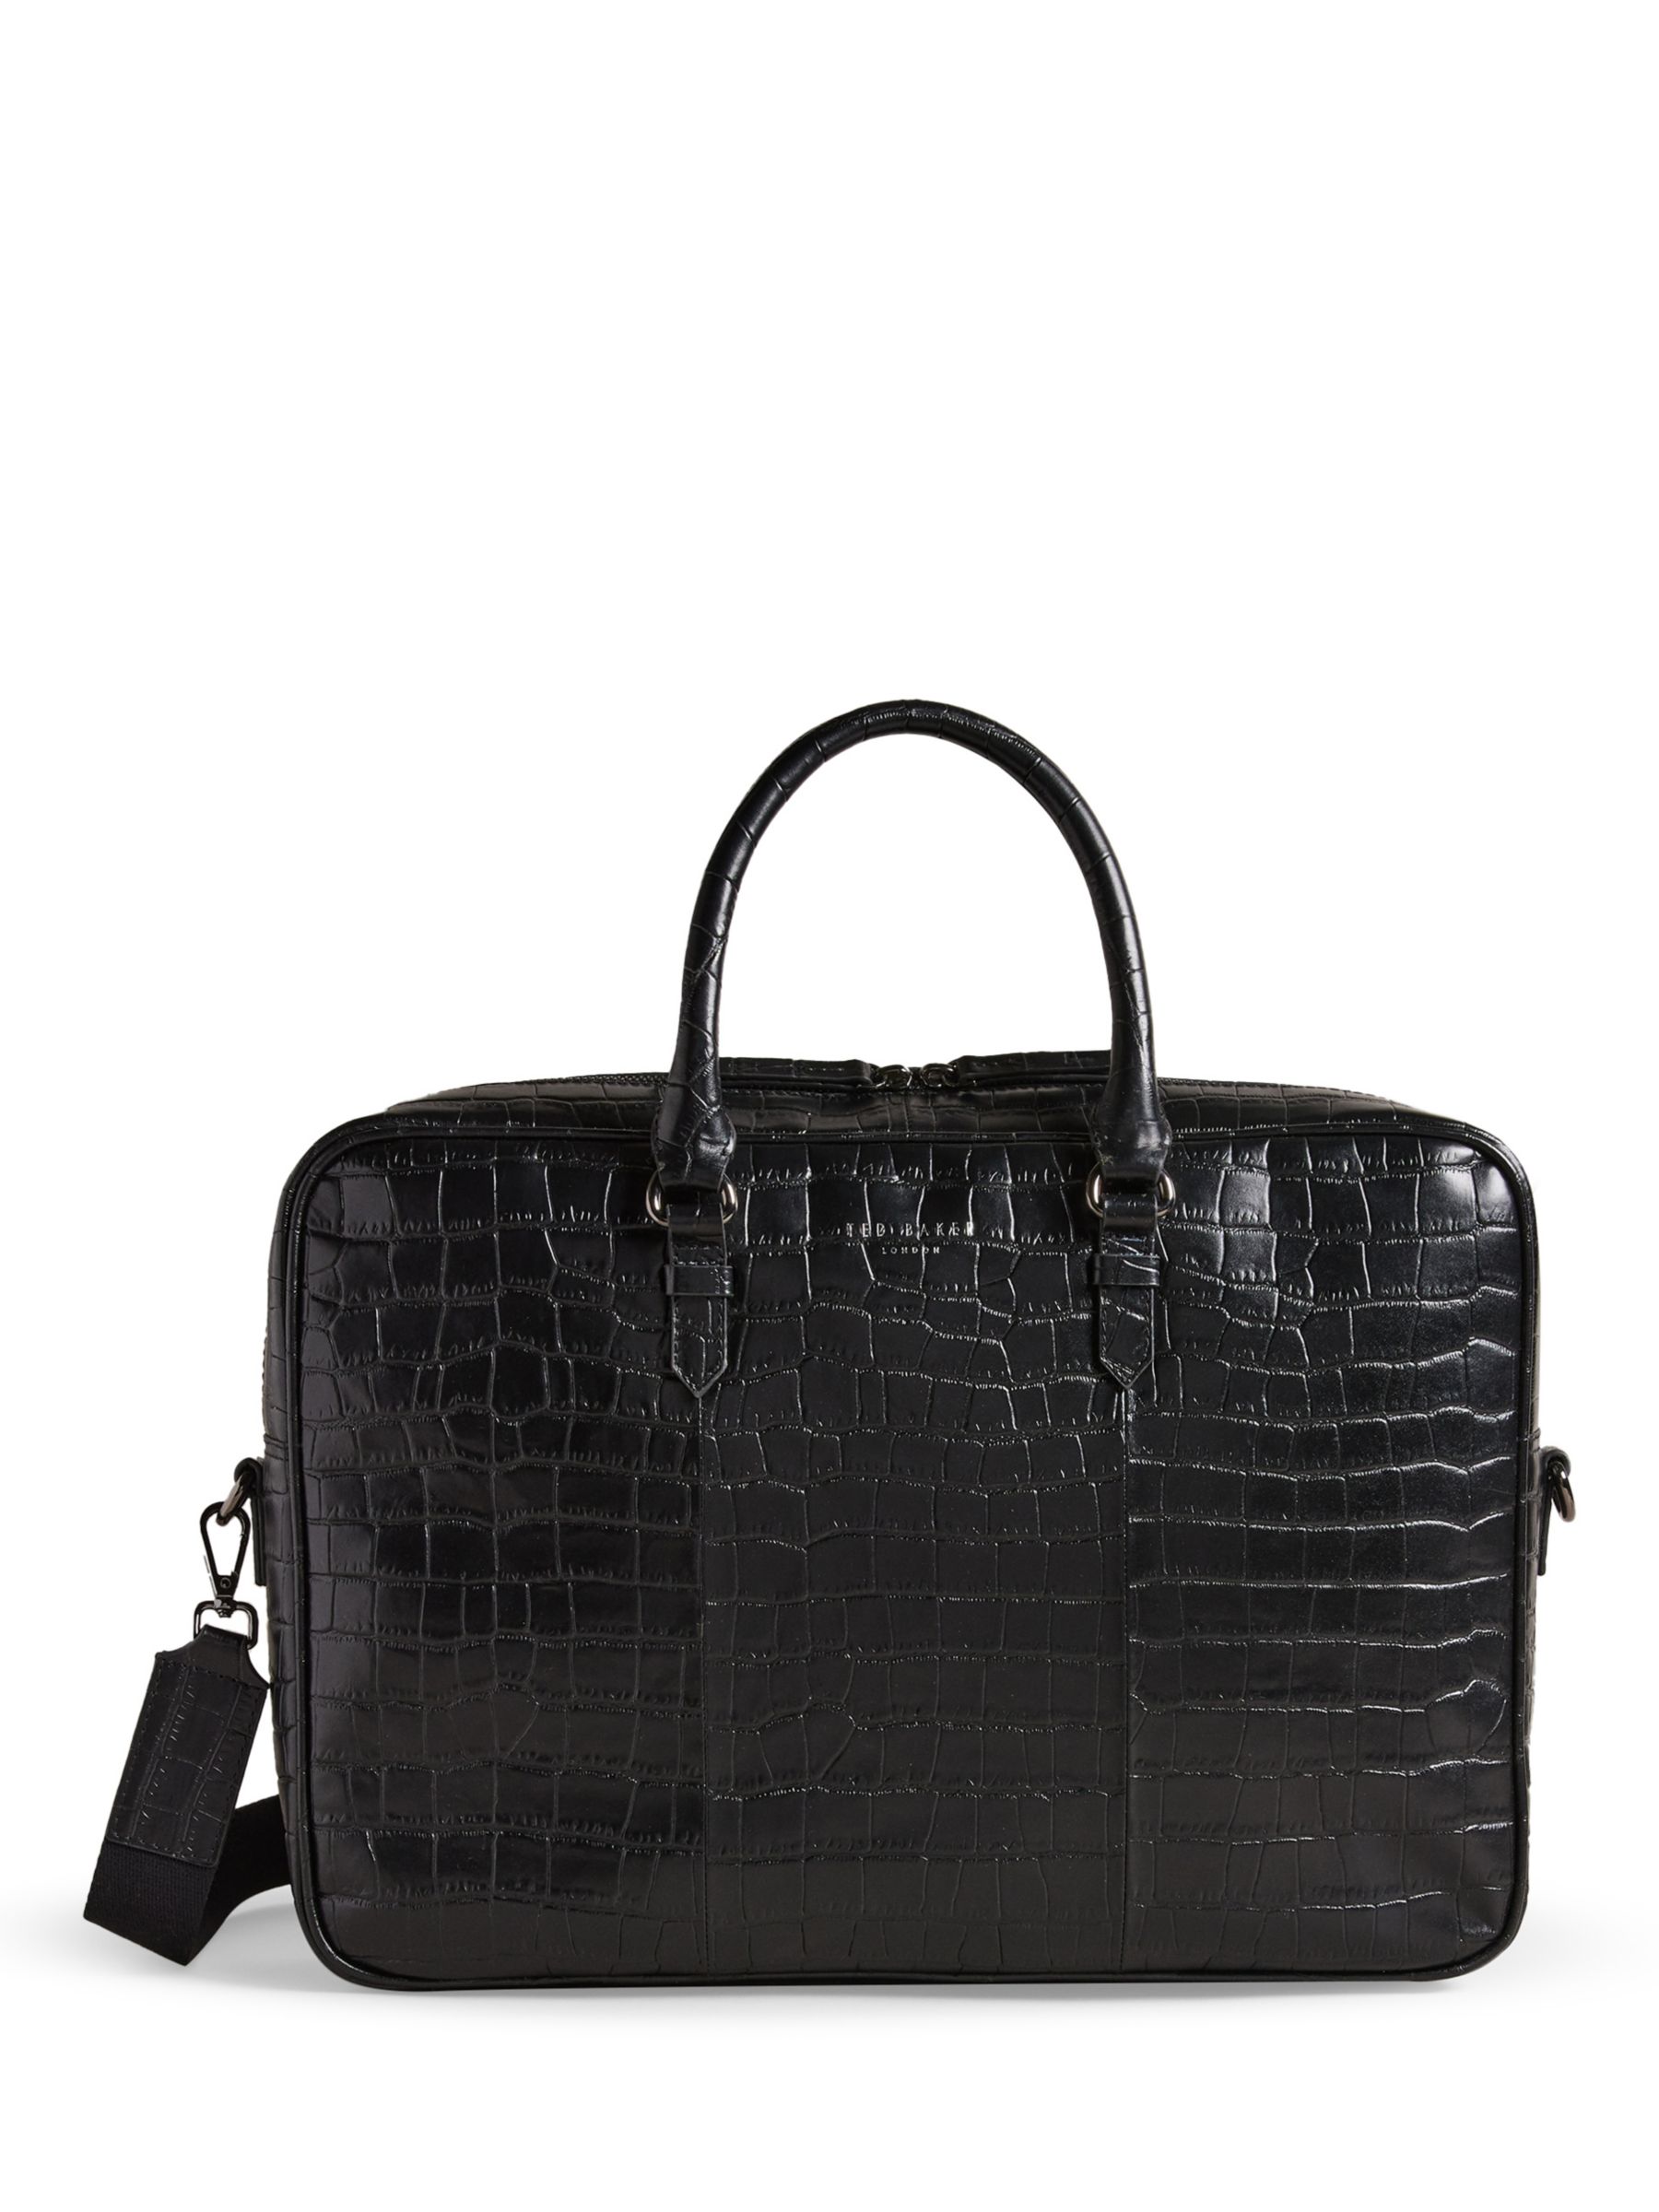 Ted Baker Croc Briefcase, Black at John Lewis & Partners